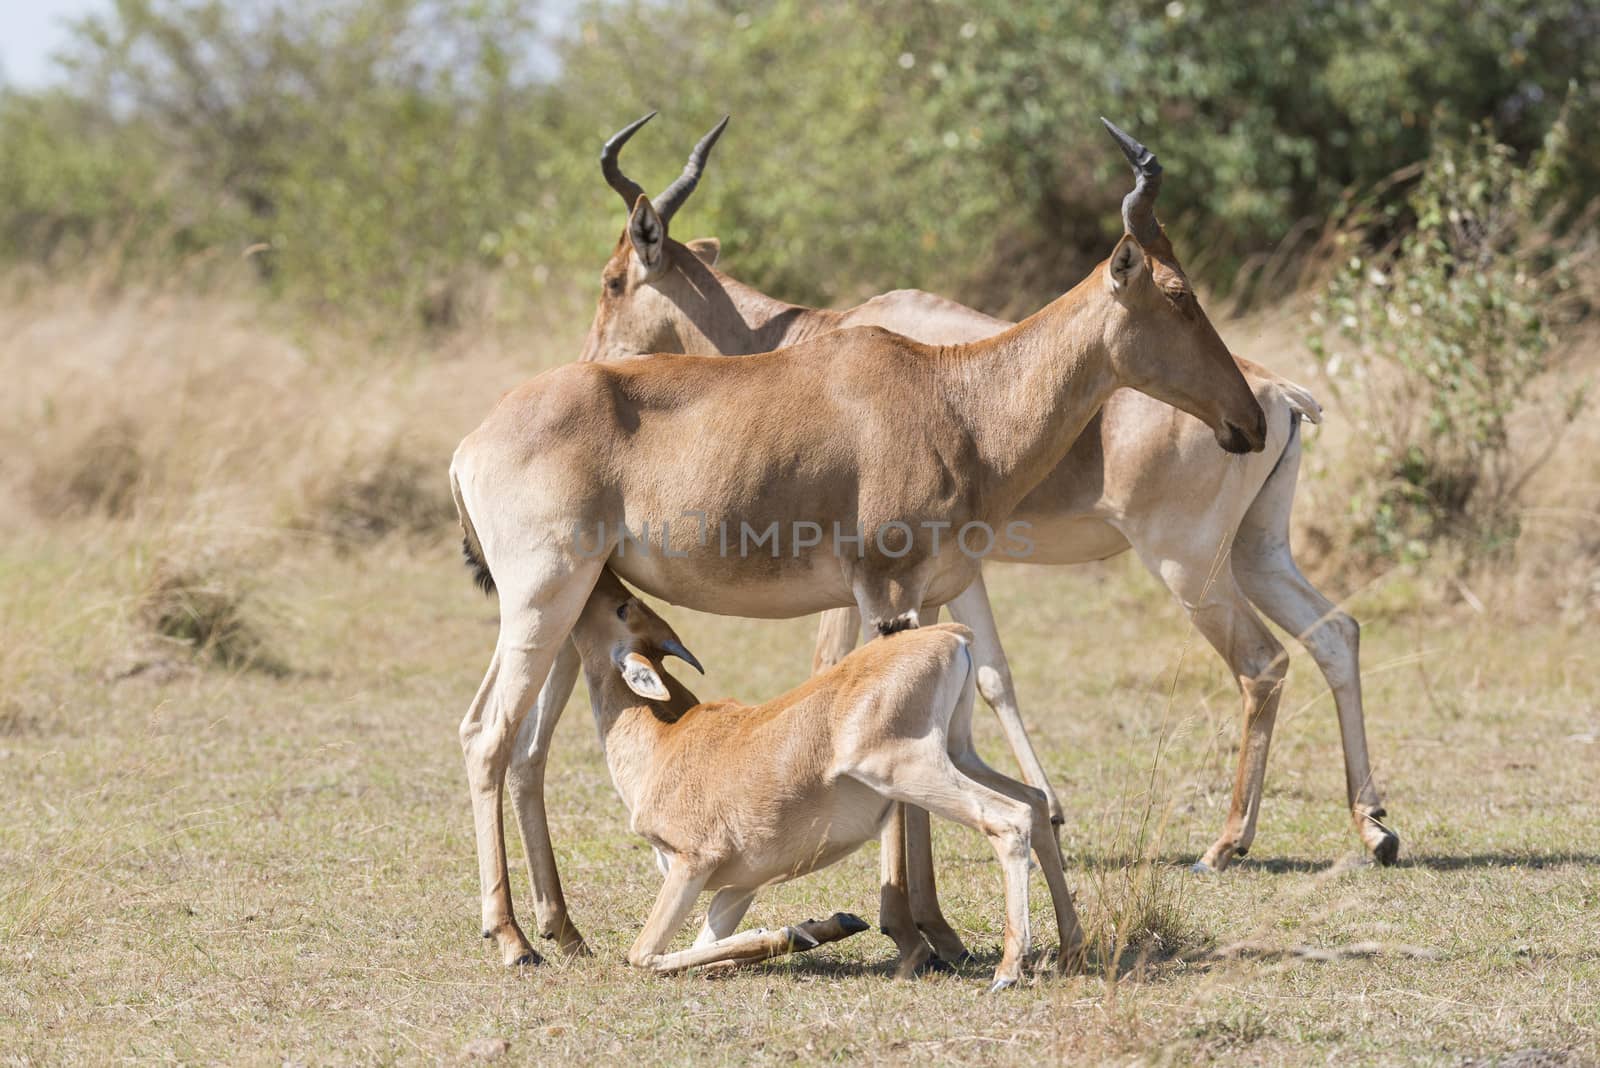 Little Cokes Hartebeest (Alcelaphus buselaphus) antelope suckling its mother , Masai Mara National reserve, Kenya, Africa